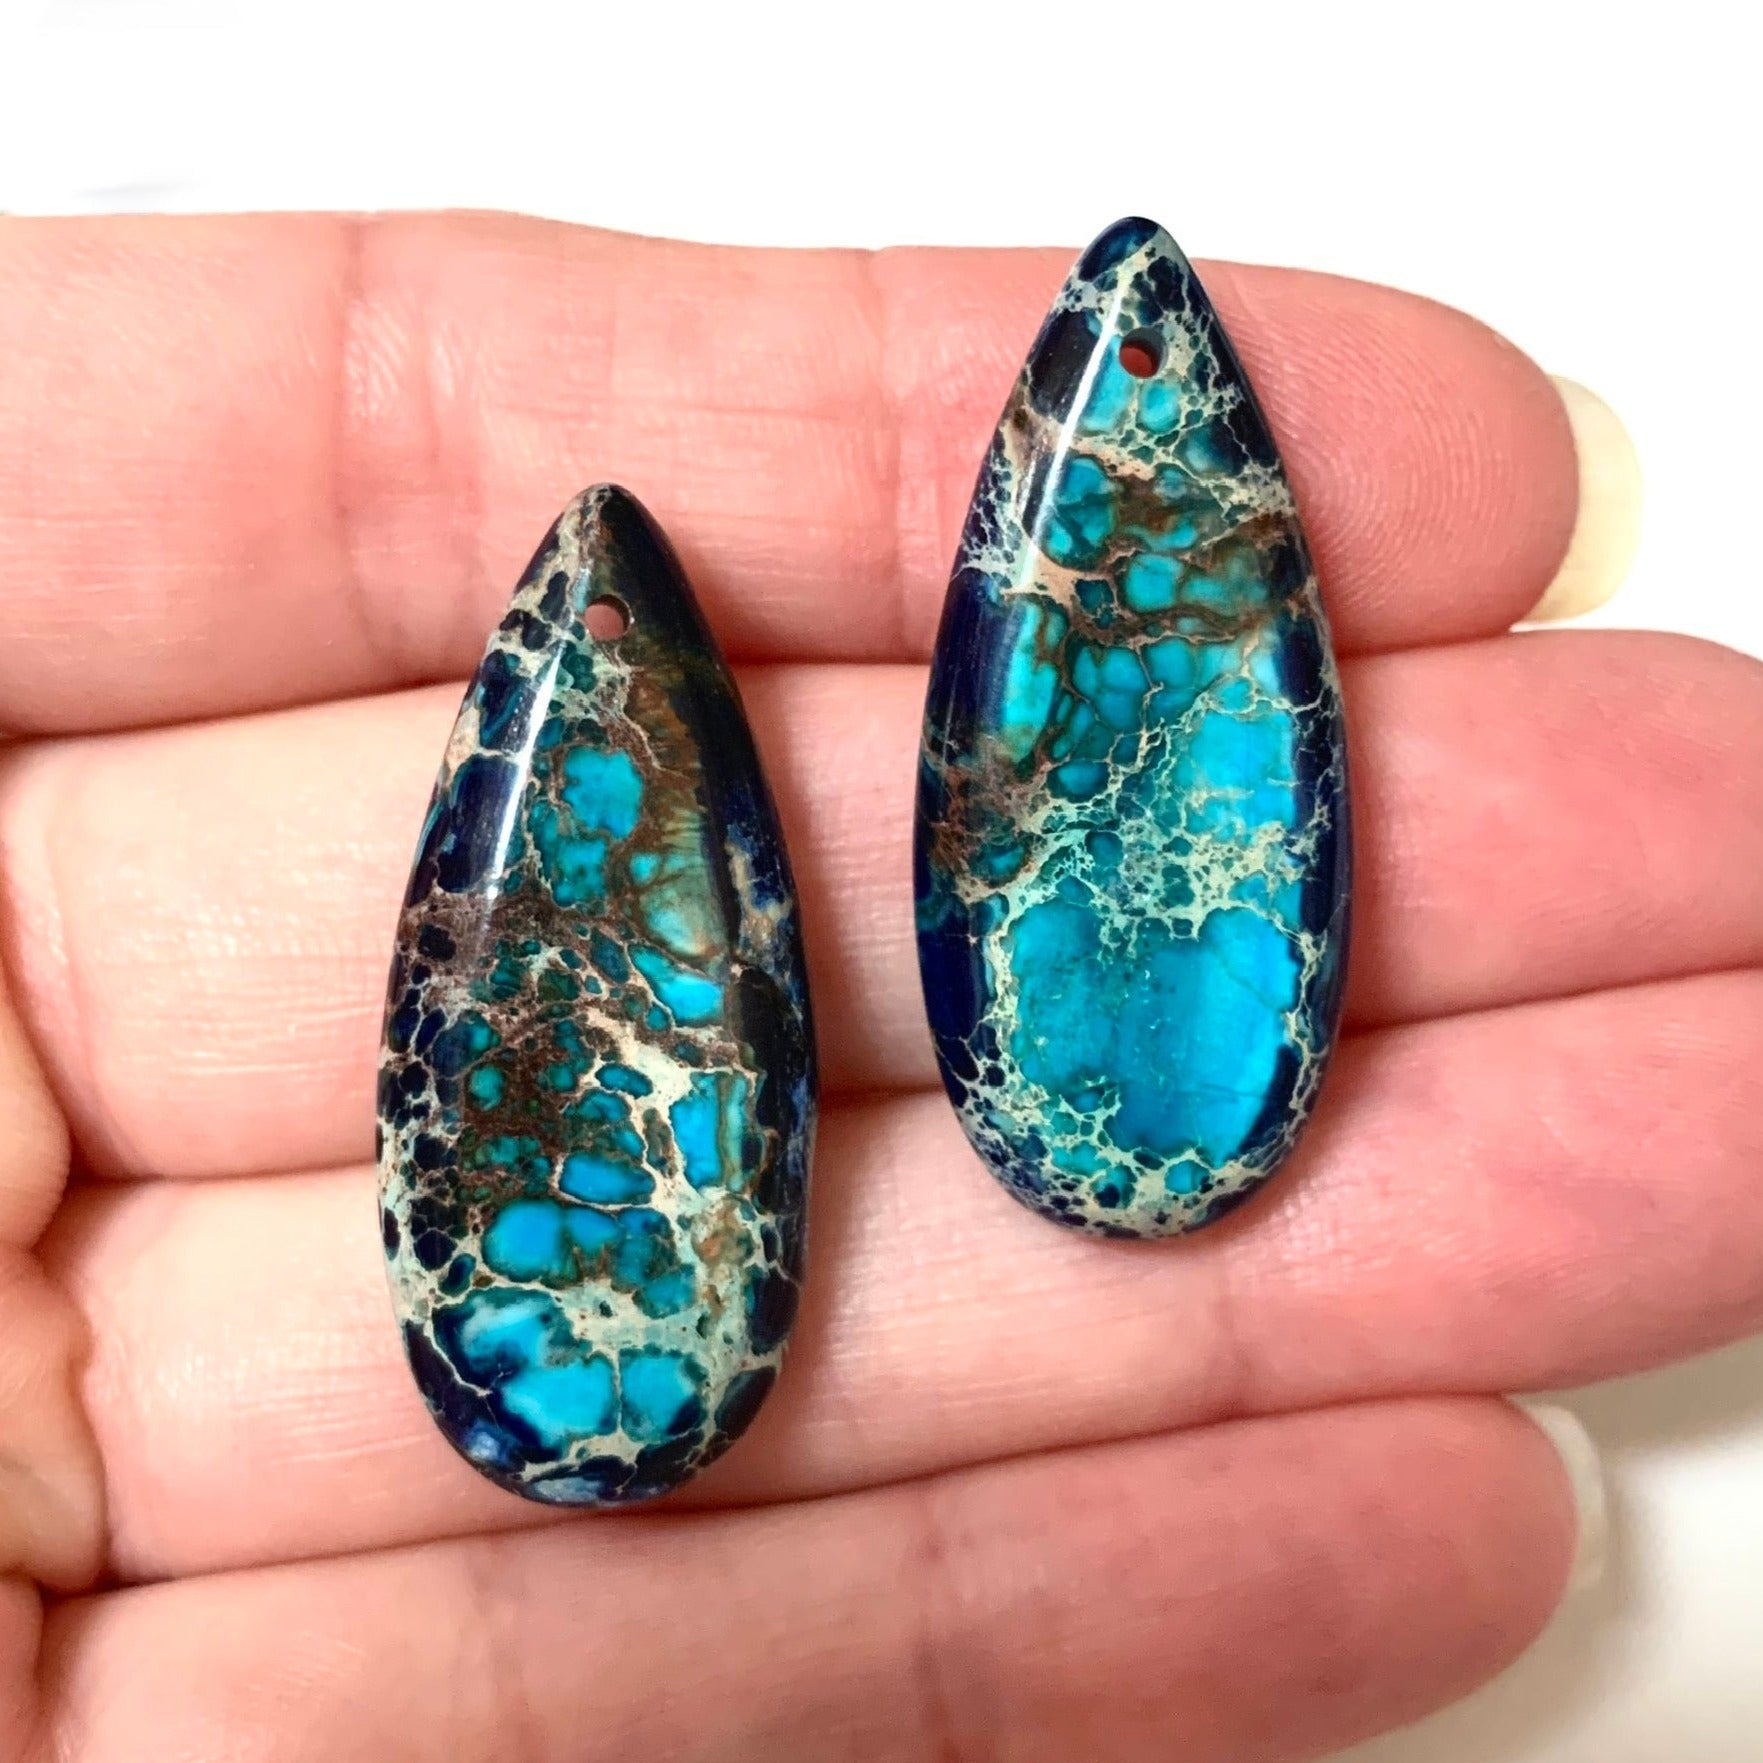 2 Sea Sediment Imperial Jasper Pendants - Dark and Aqua Blue - Earring Drops - Teardrop Earring Pair/2 Pieces